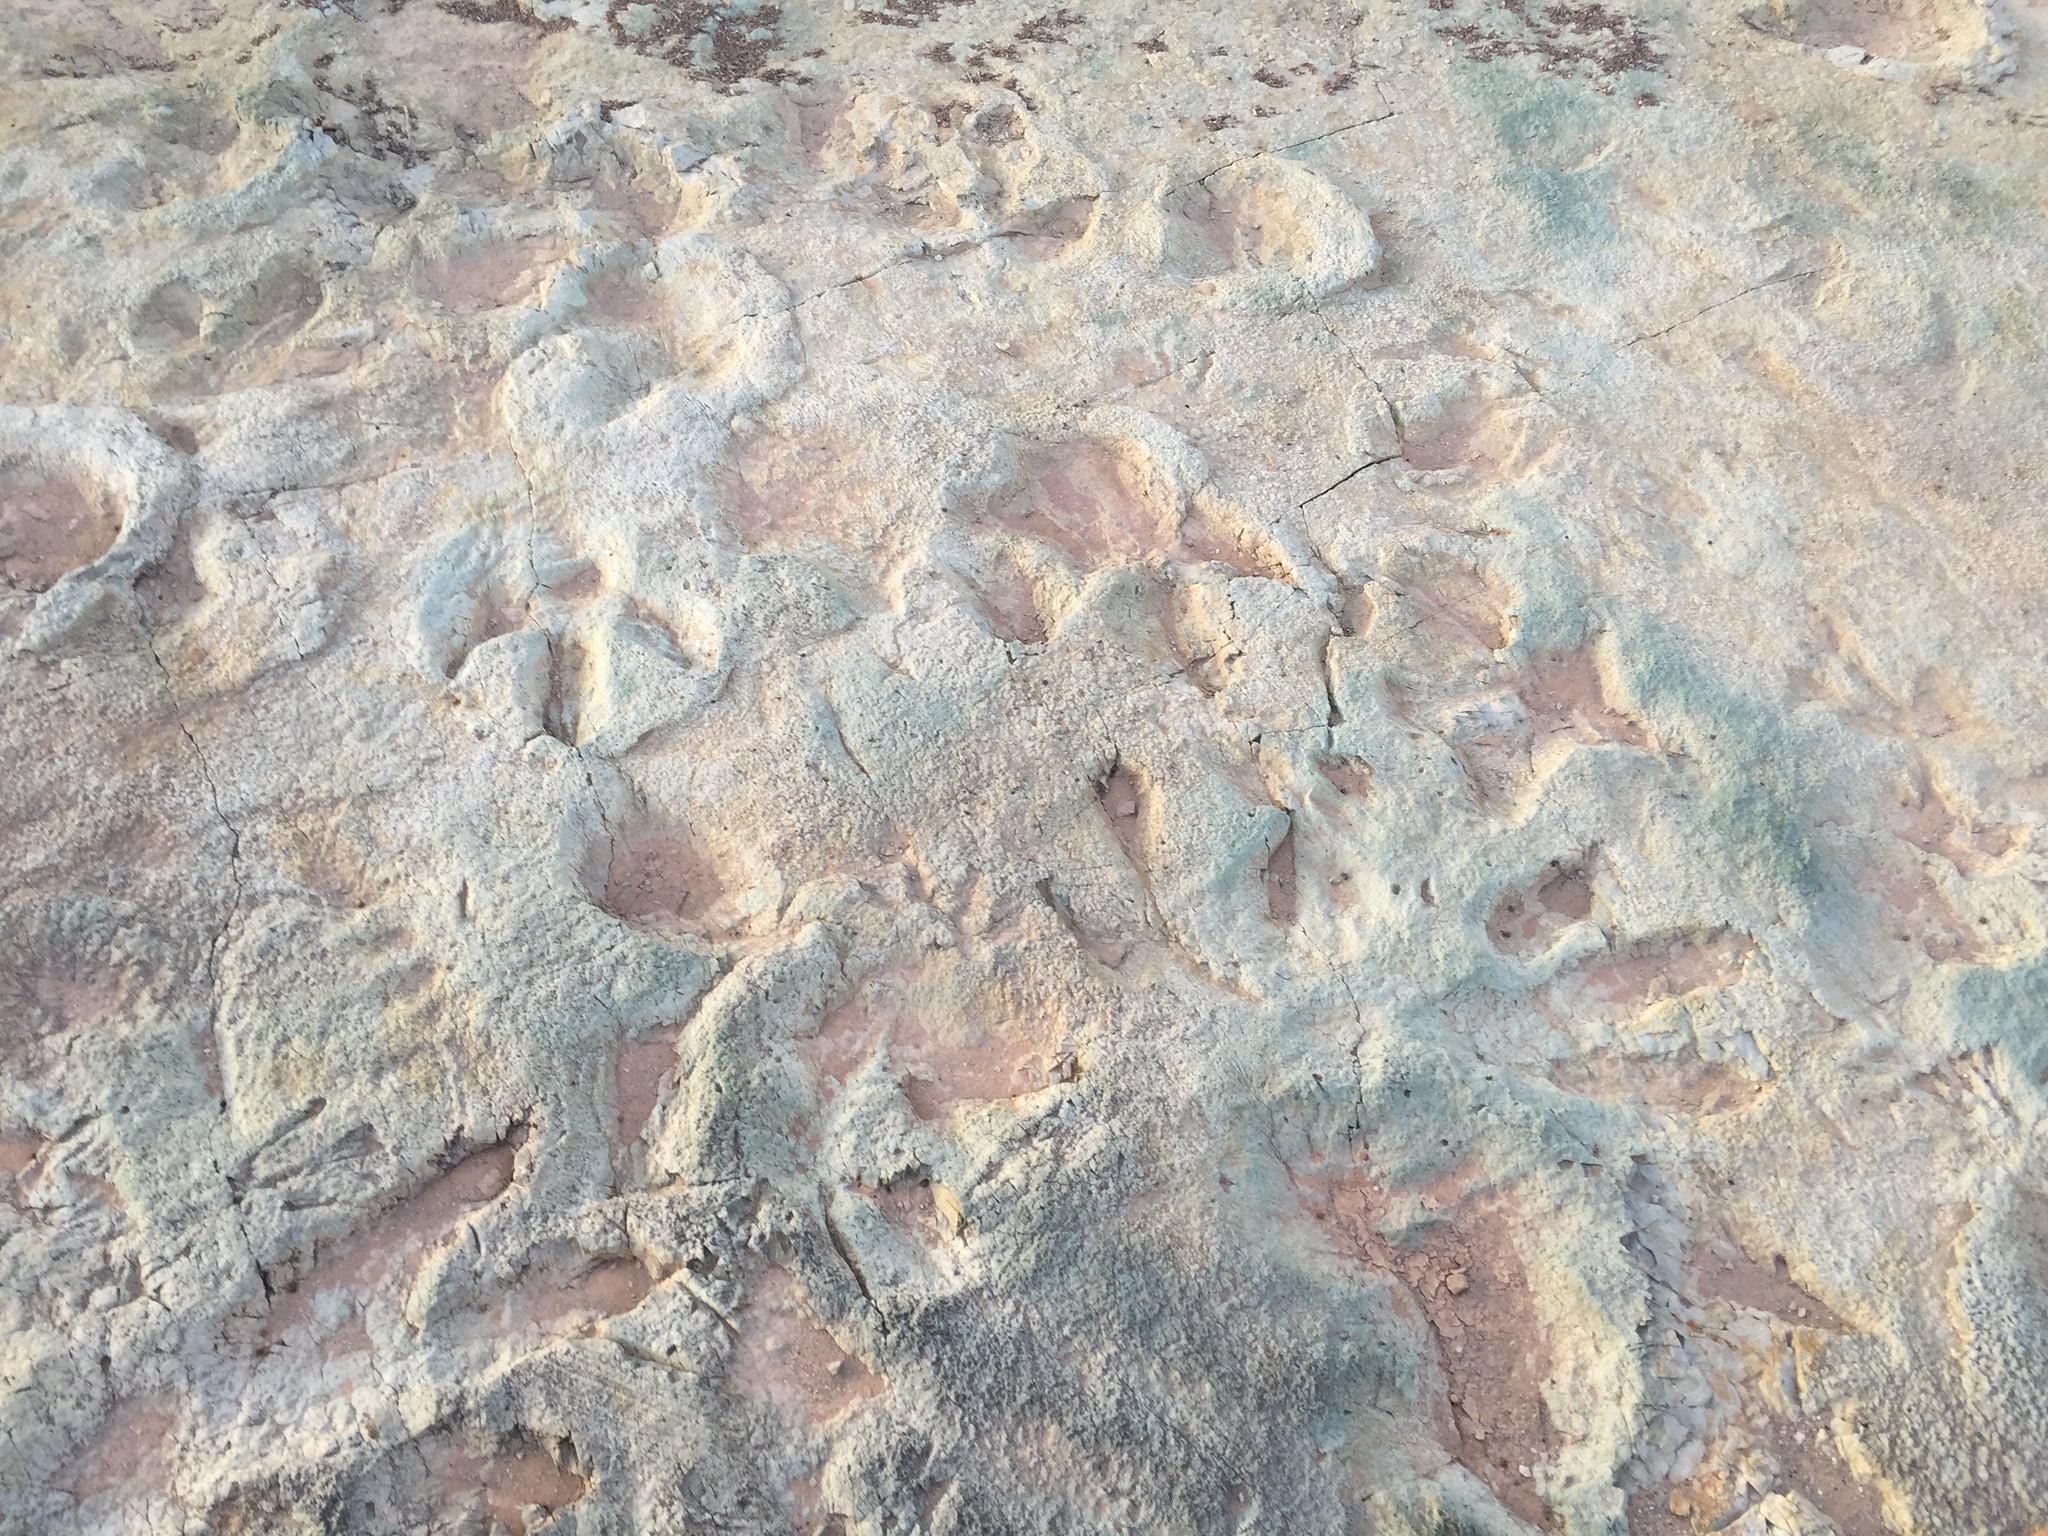 Fossilized tracks at Mill Canyon. (Photo: Bureau of Land Management)